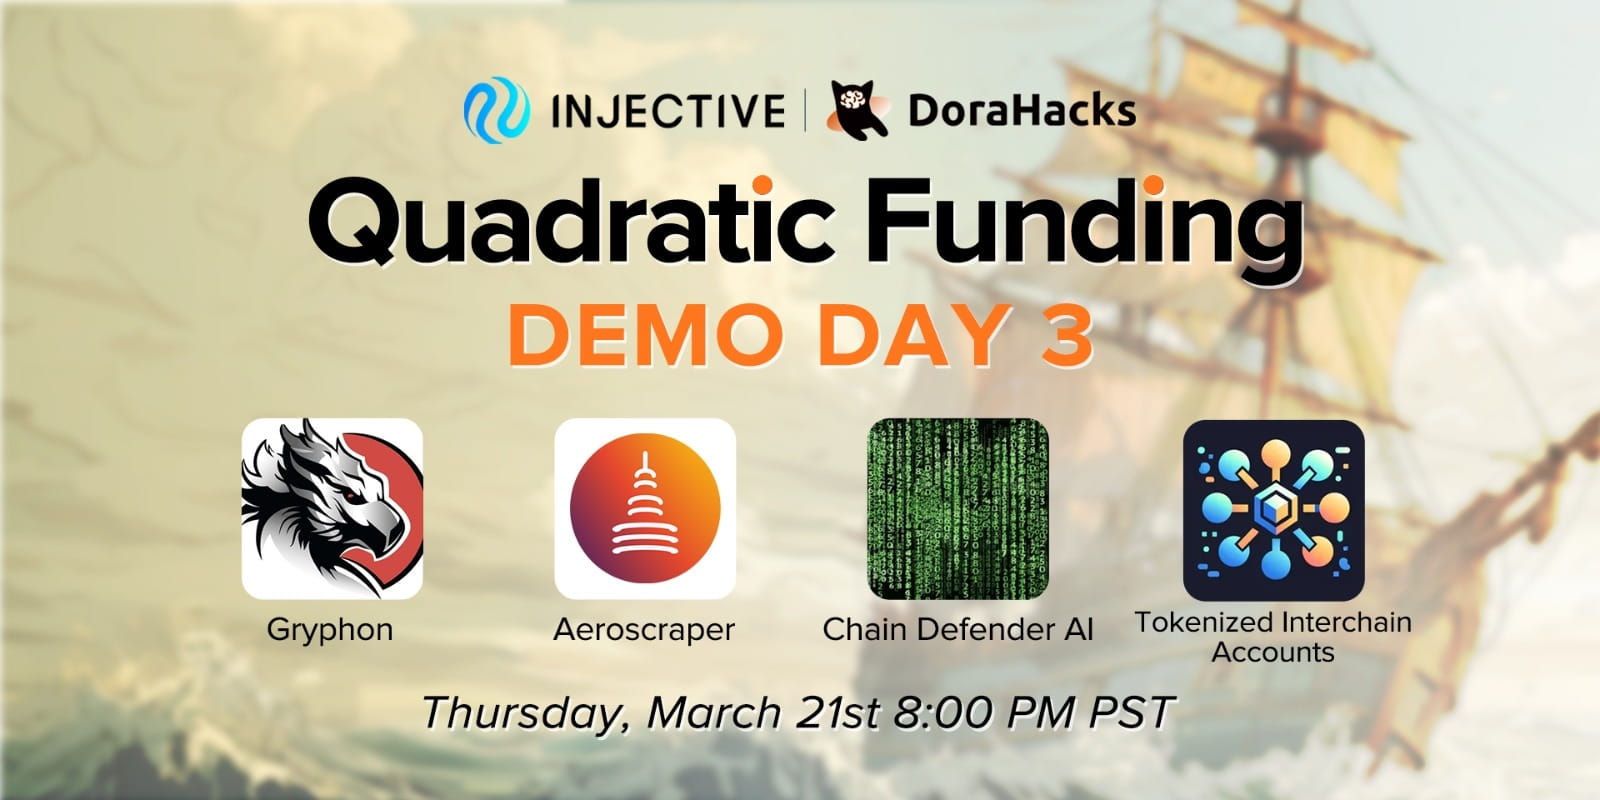 Injective Grant DAO Quadratic Funding Round1 Demo Day 3